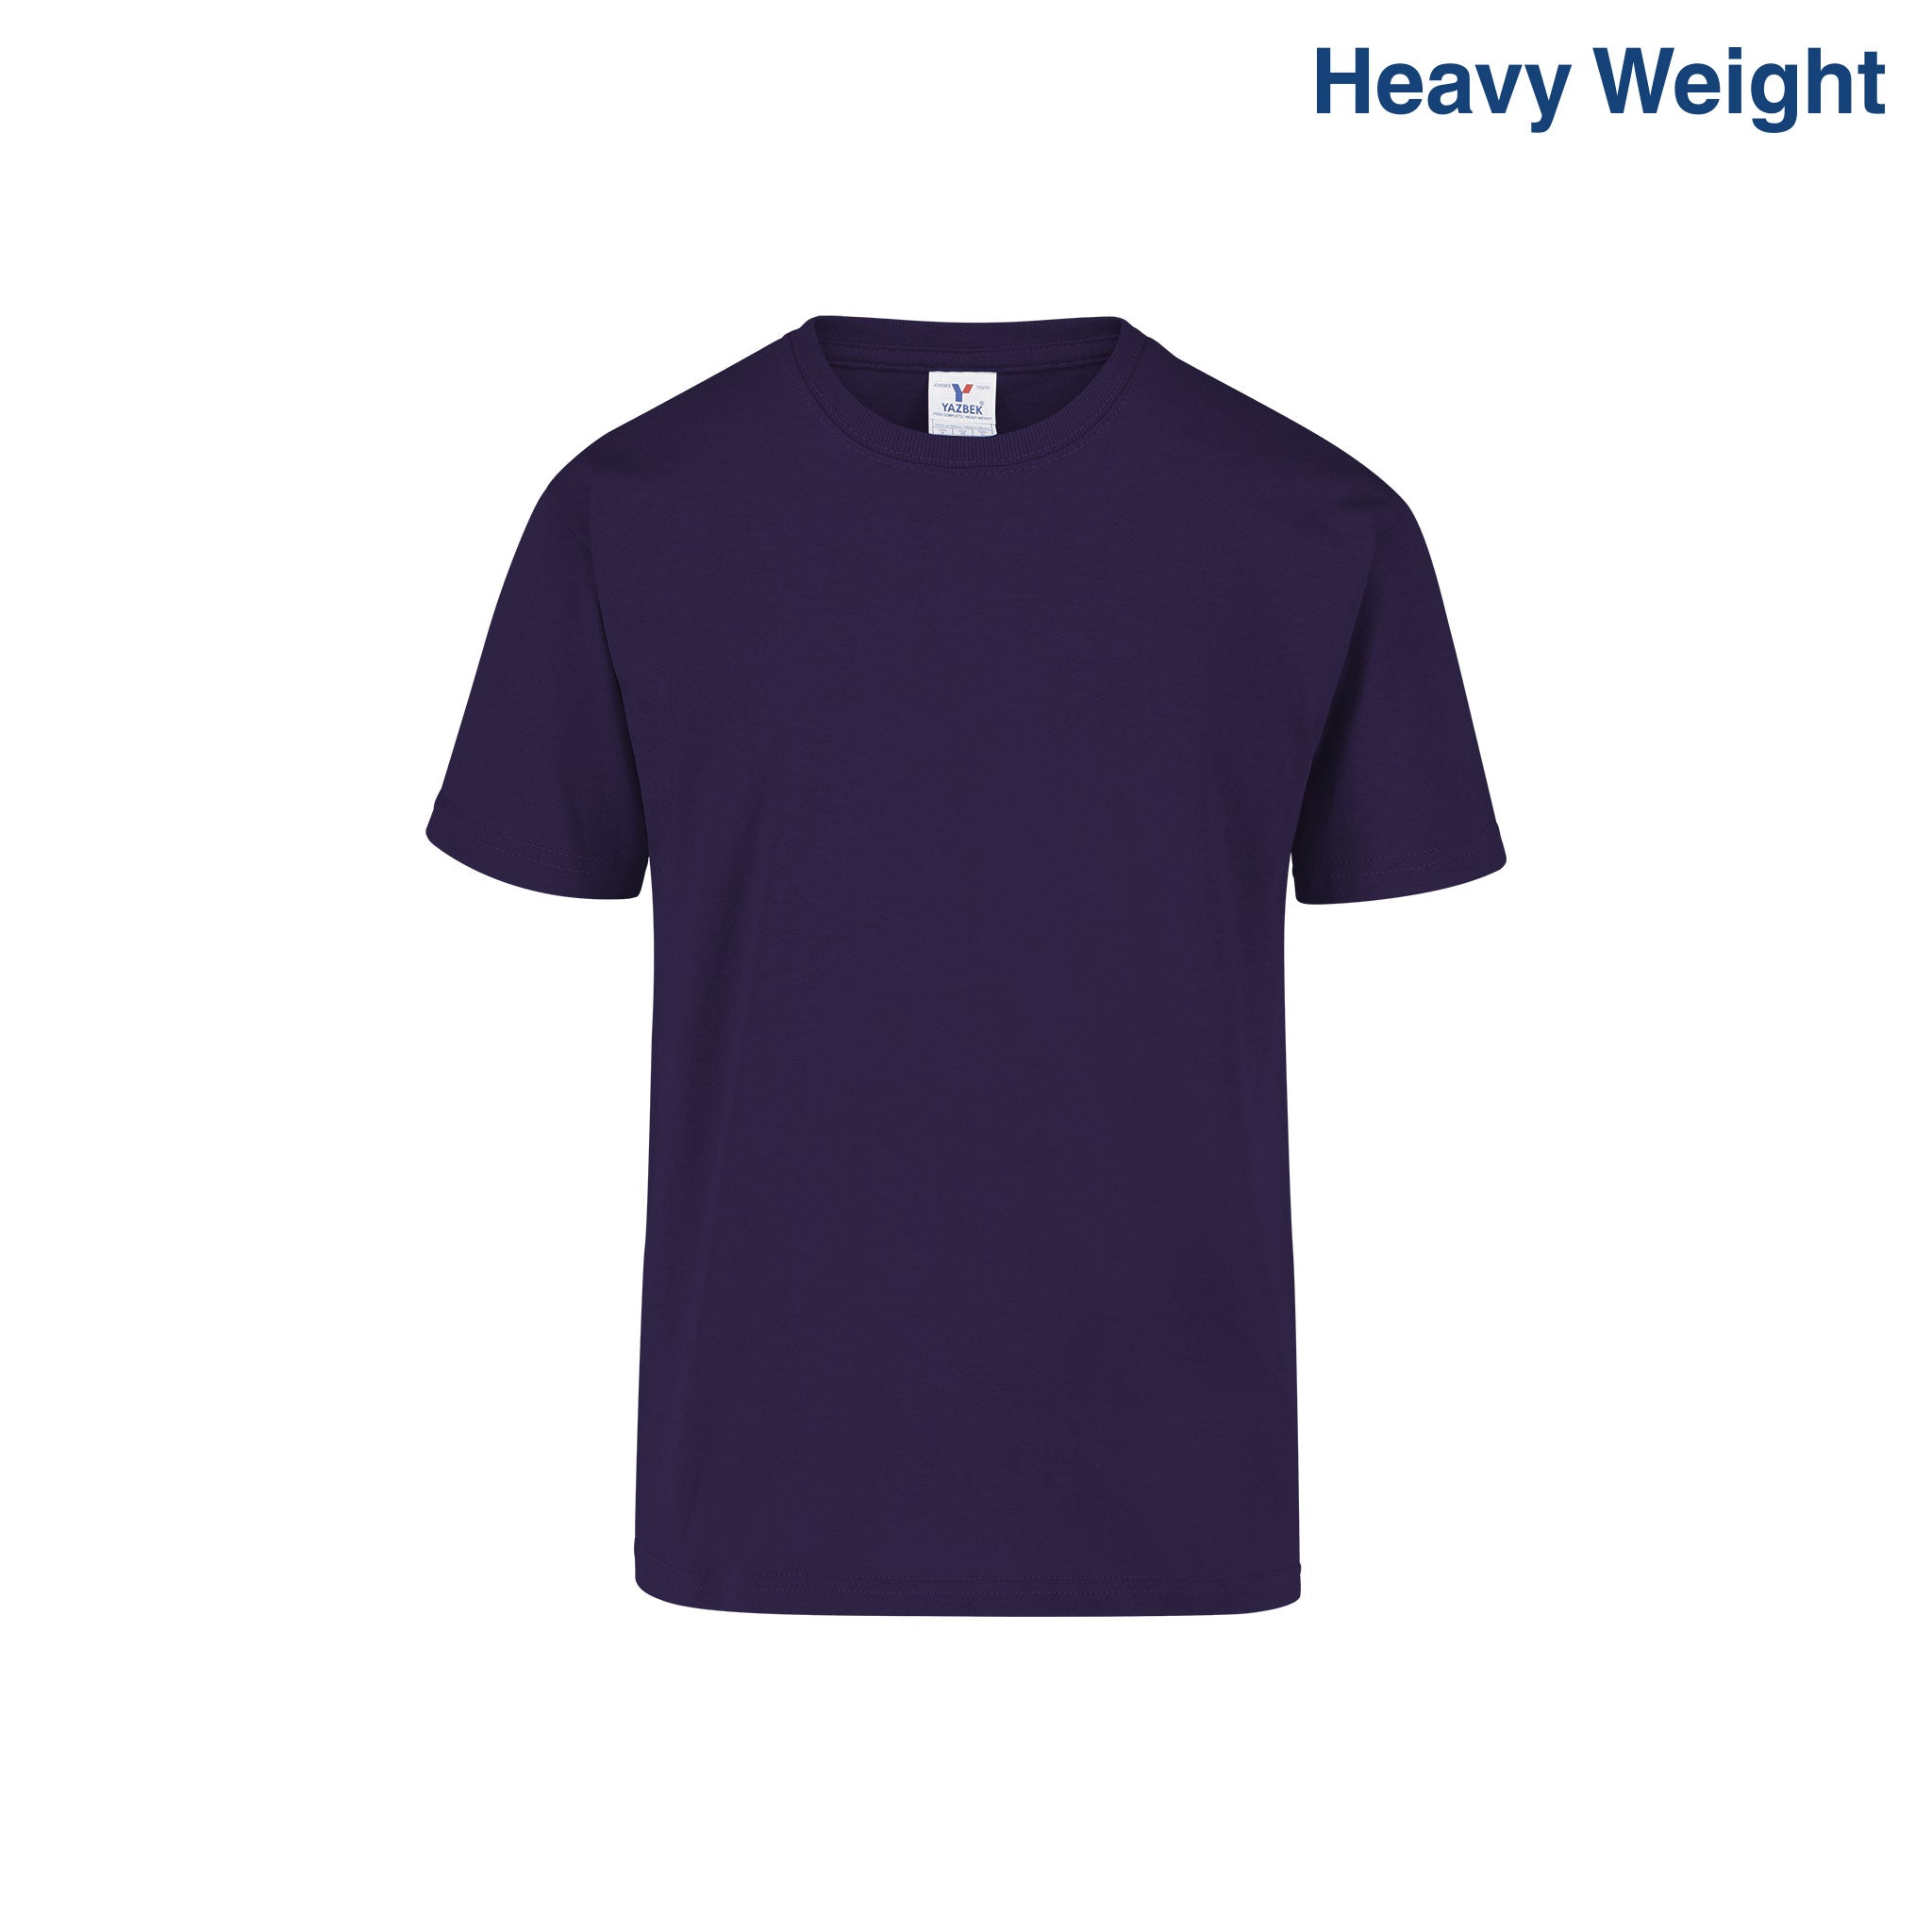 Youth's Heavy Weight Crew Neck Short Sleeve T-Shirt (Purple 